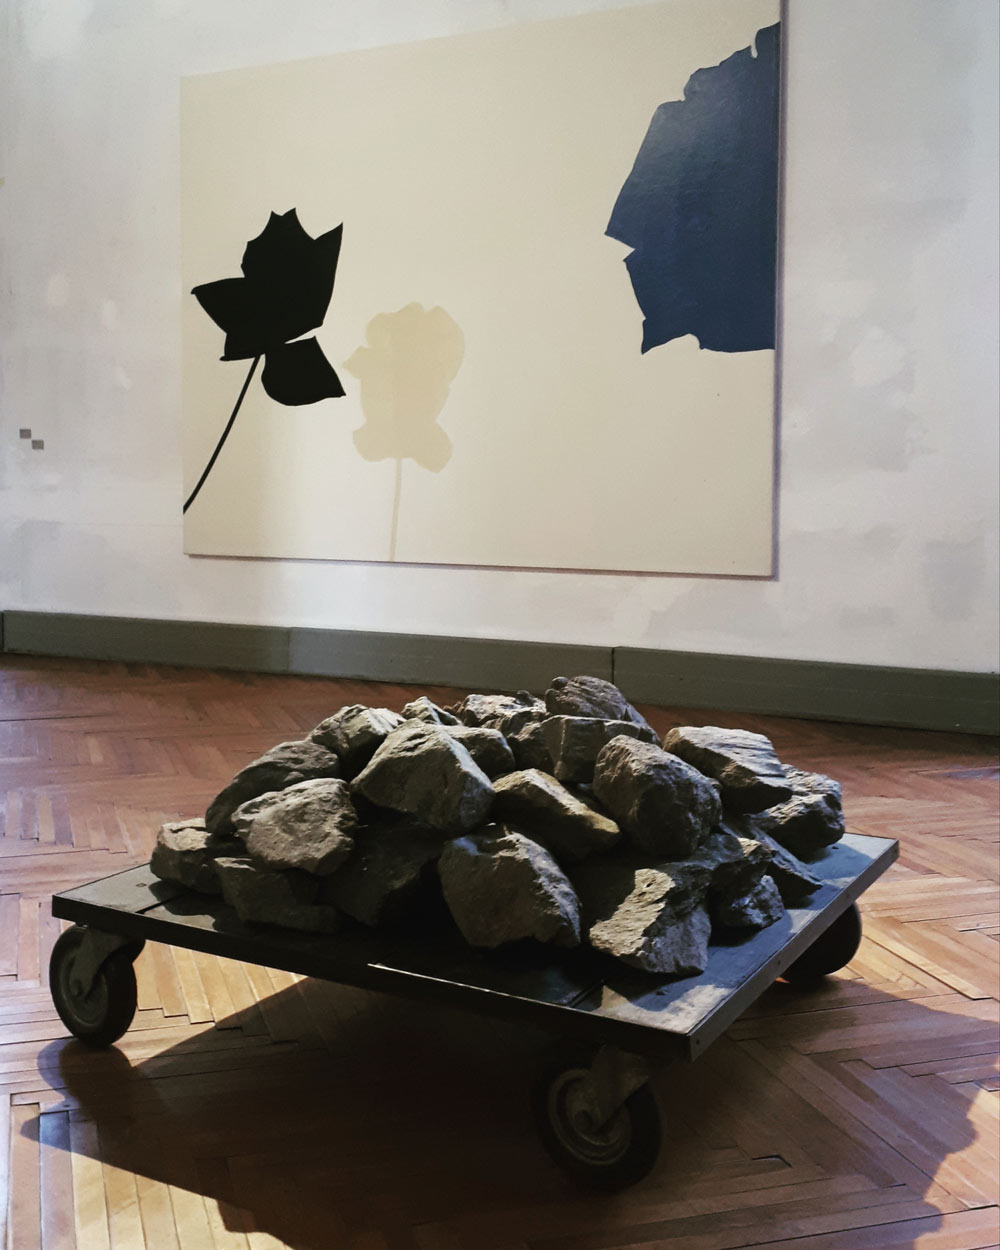 Jannis Kounellis @ Fondazione Prada